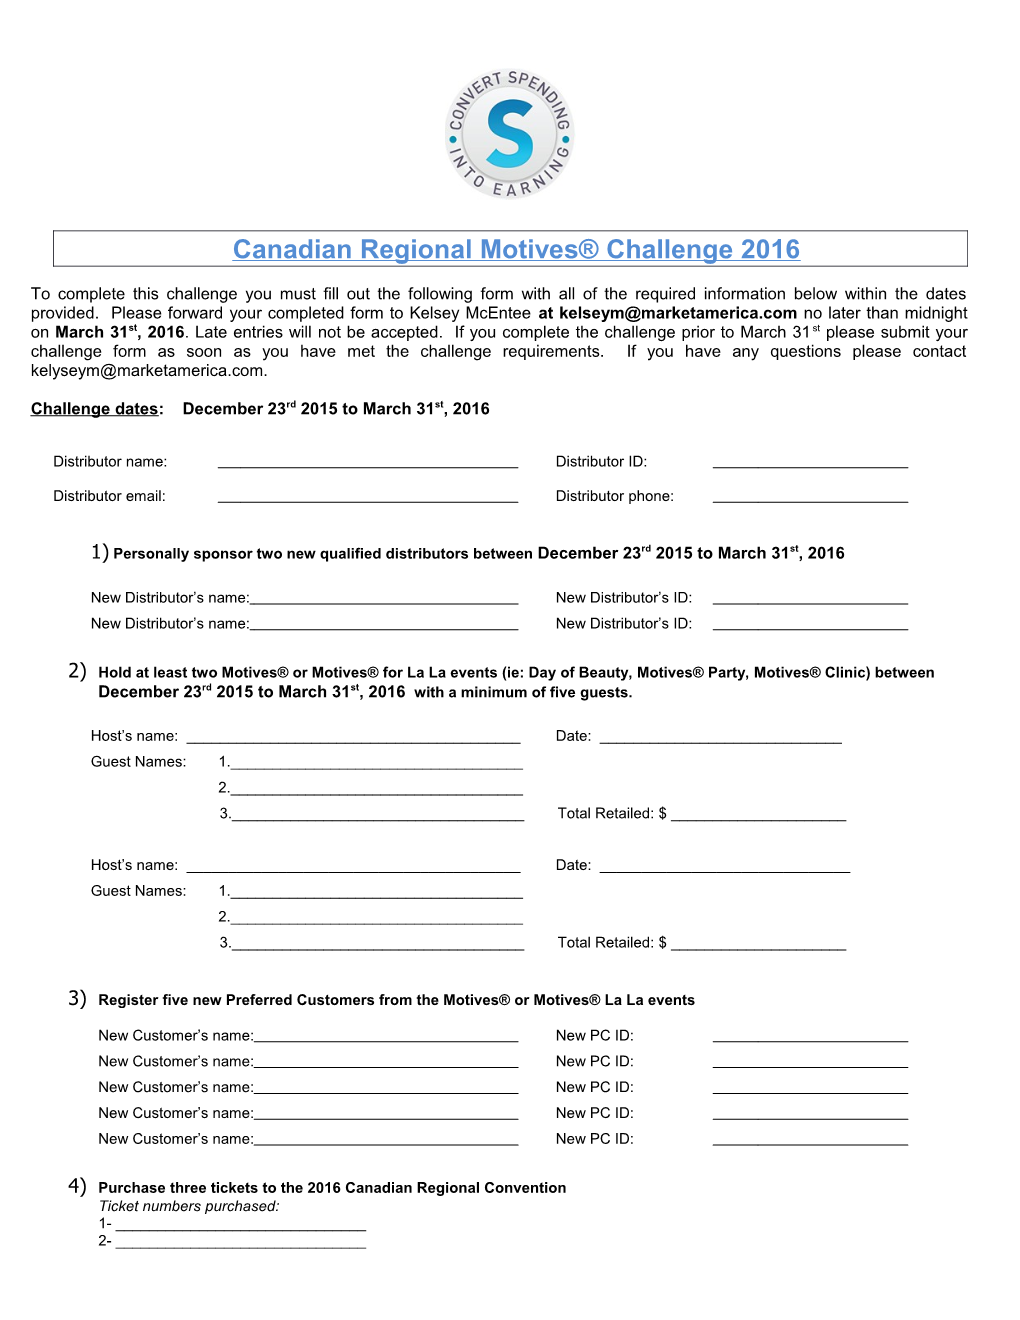 Canadian Regional Motives Challenge 2016